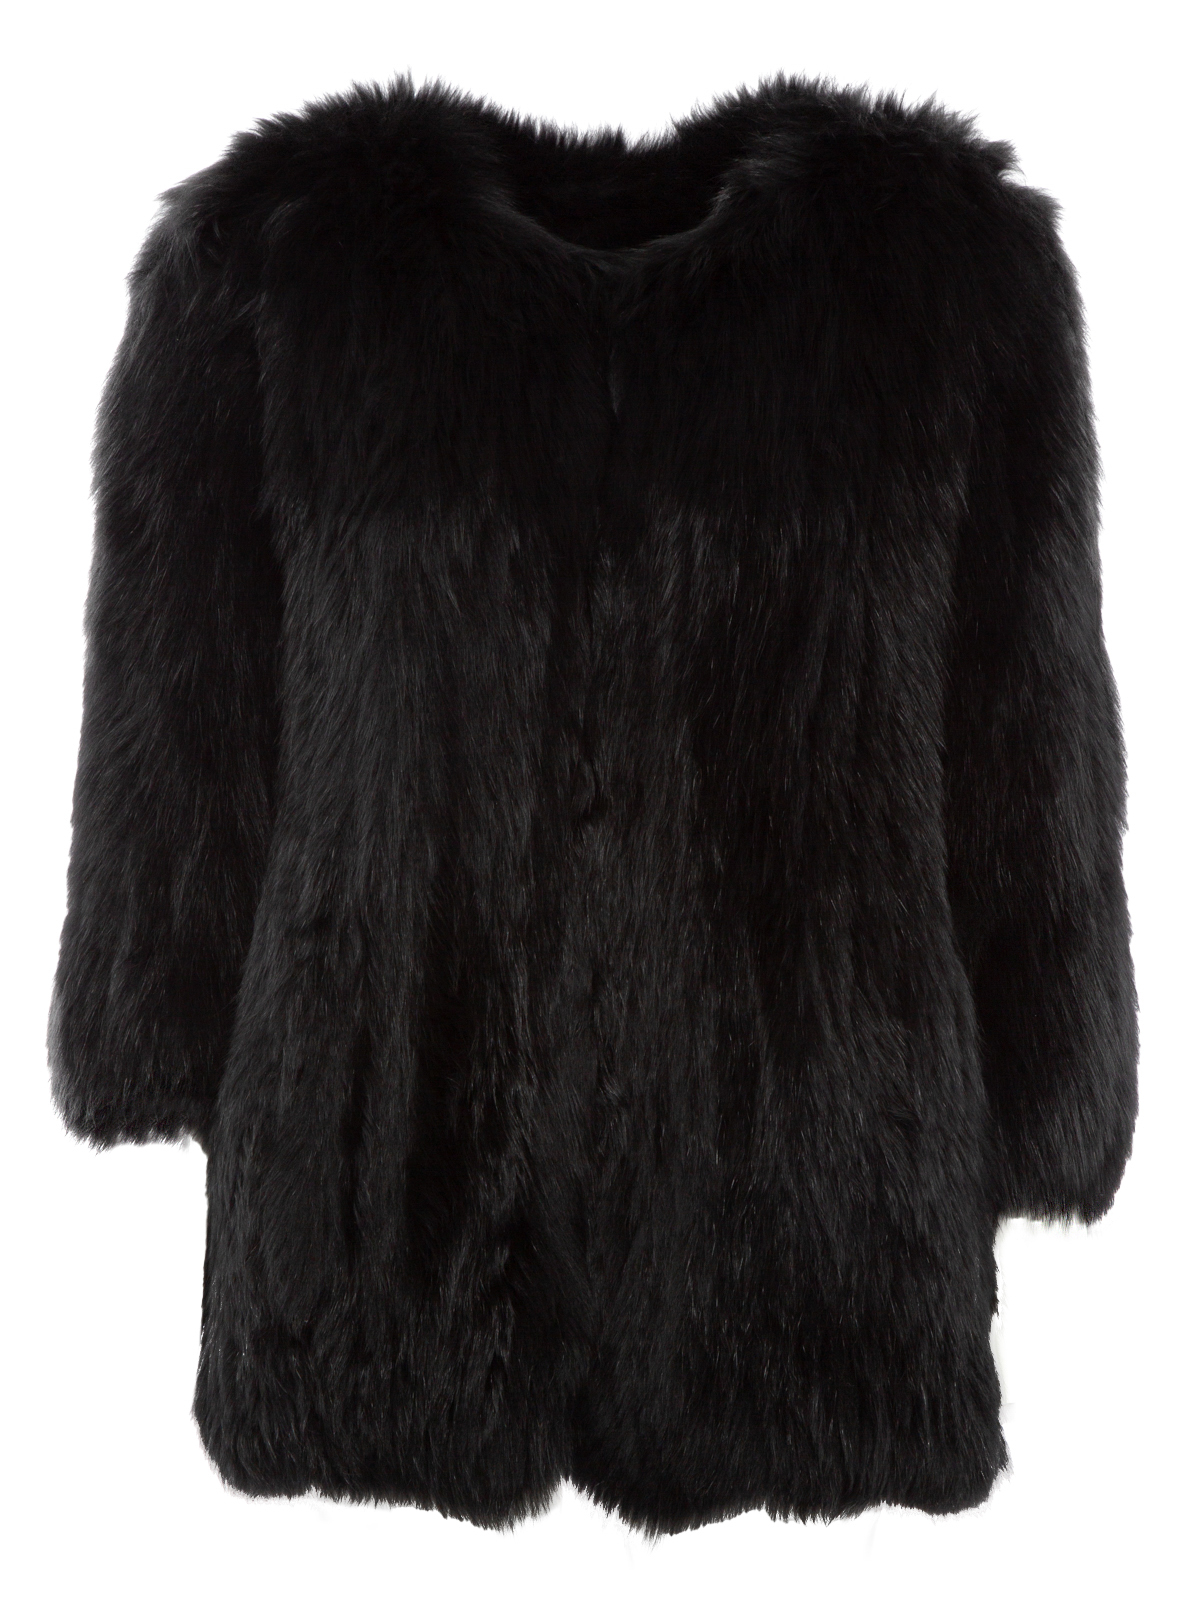 Theory Black Fox Fur Jacket, Size M